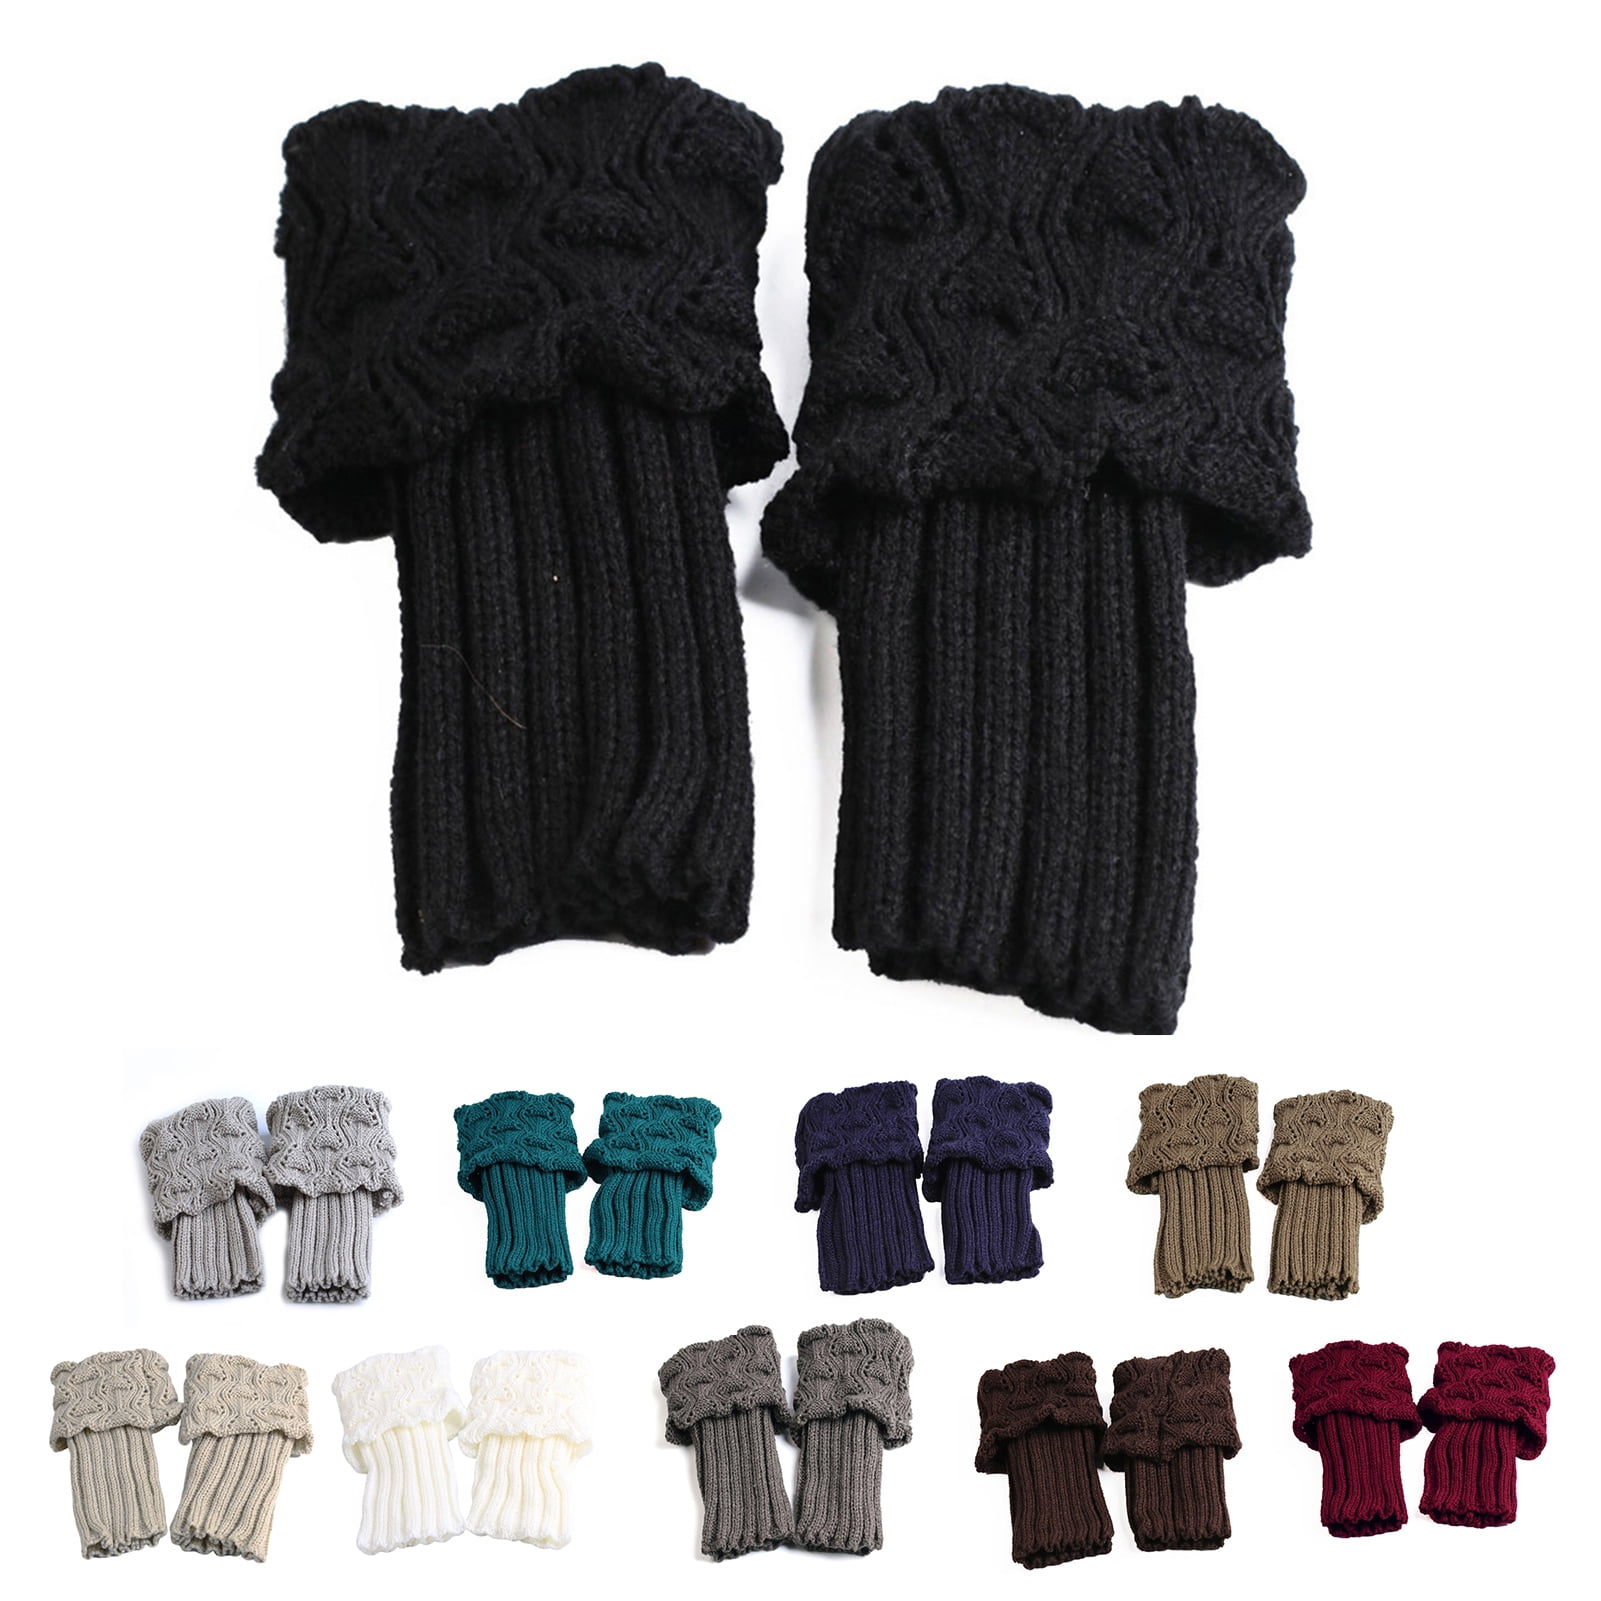 Visland 1 Pair Women's Crochet Boot Cuffs Autumn Spring Short Socks ...